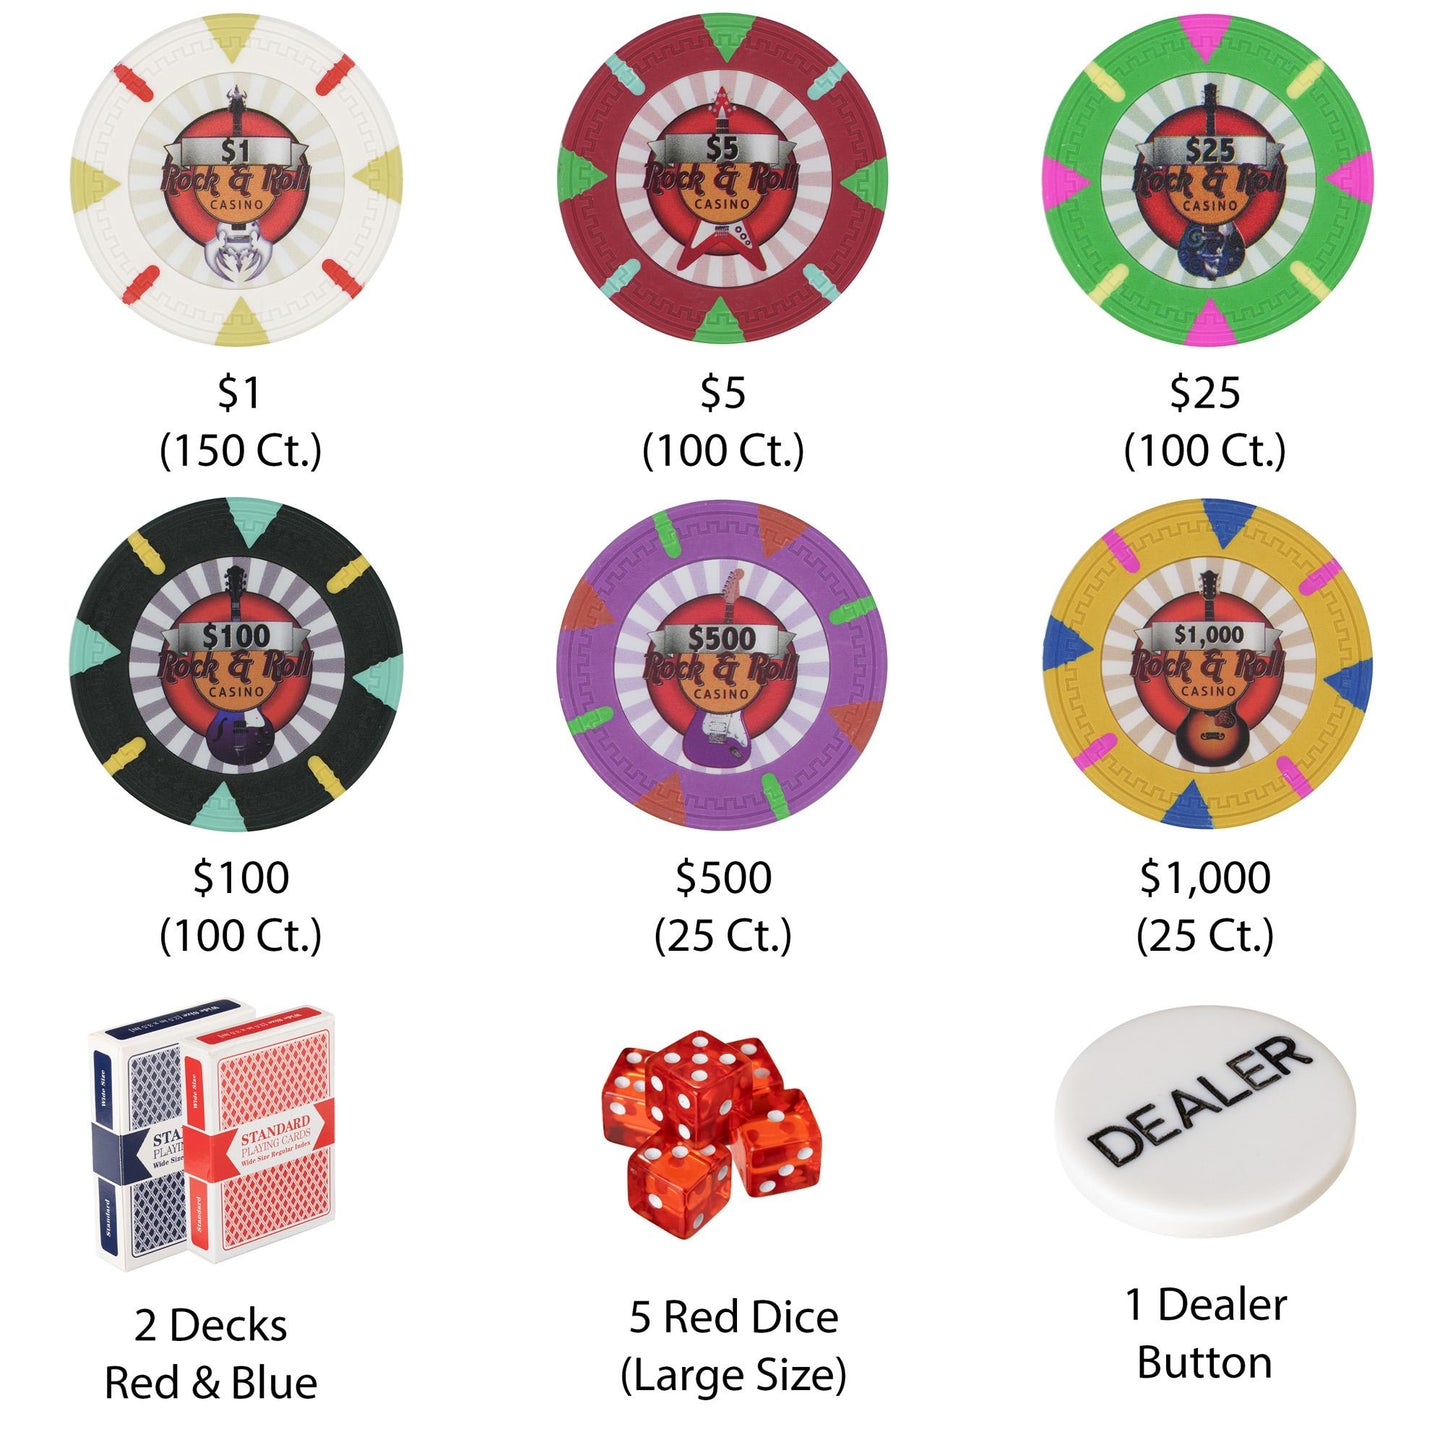 500 Rock & Roll Poker Chips with Walnut Case